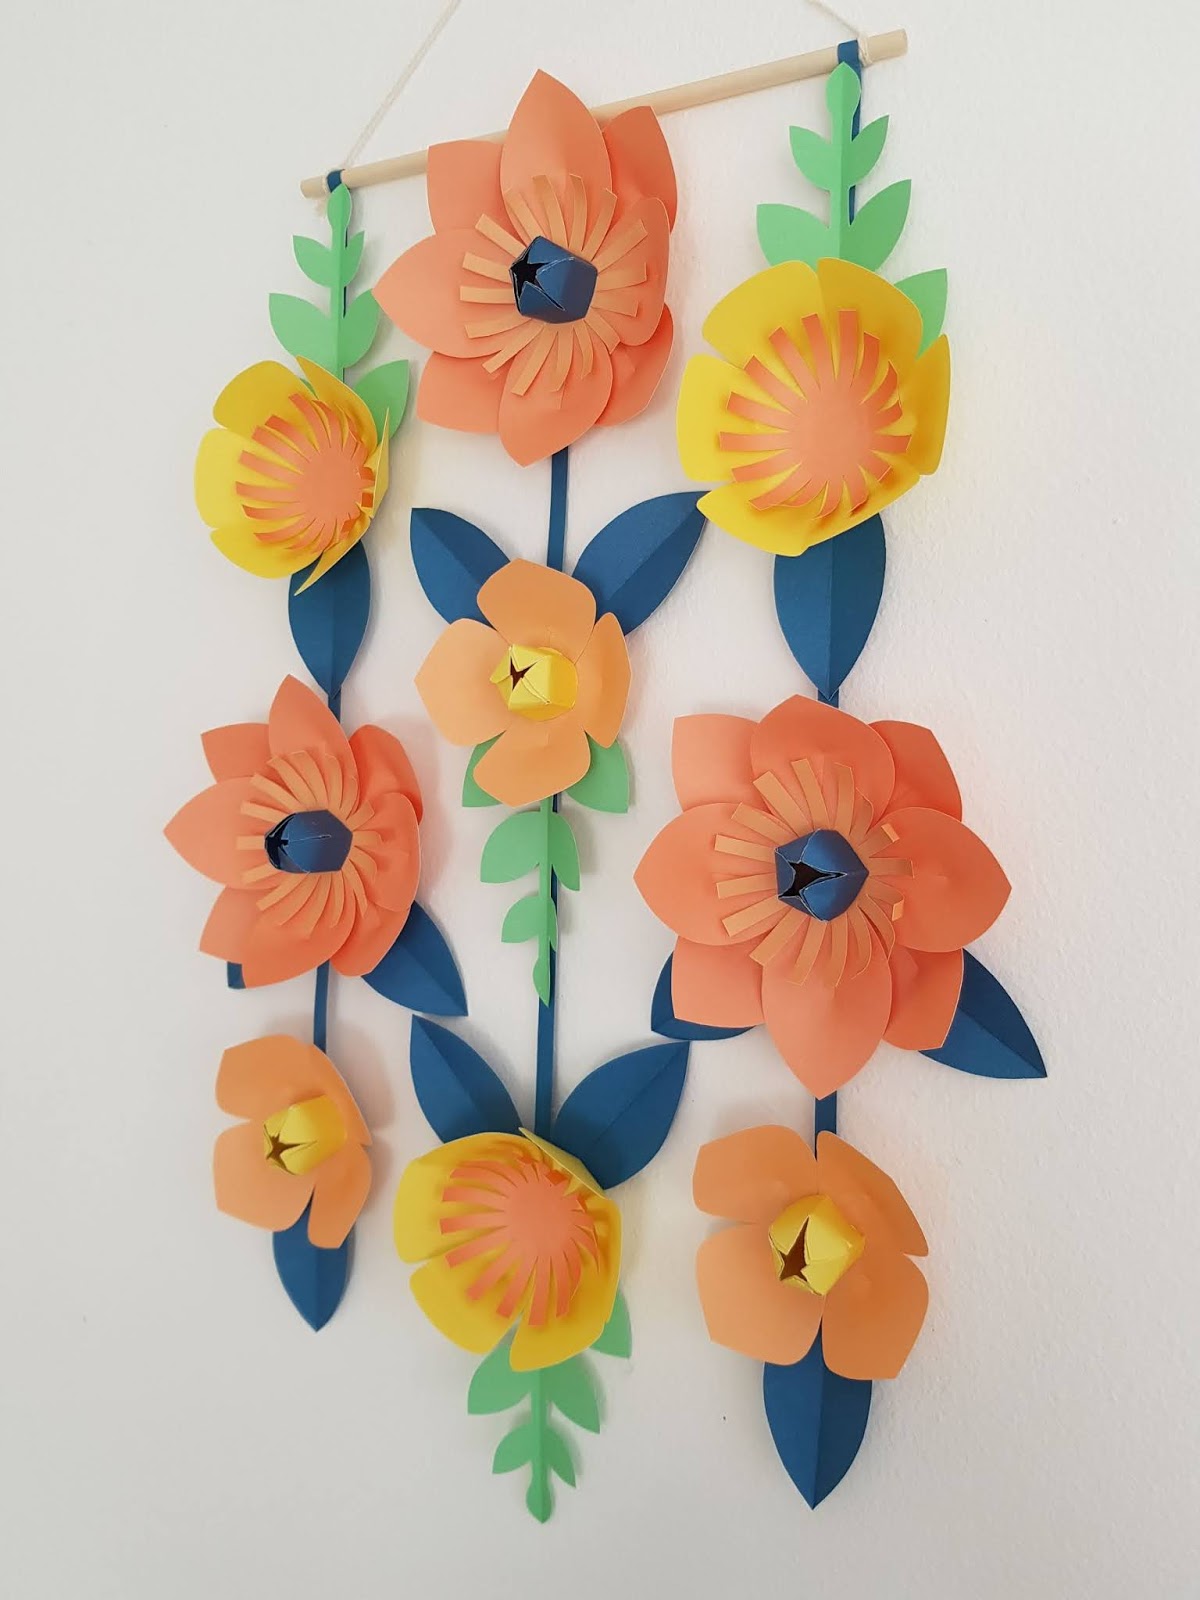 A Playful Stitch: Paper Flower Wall Hanging